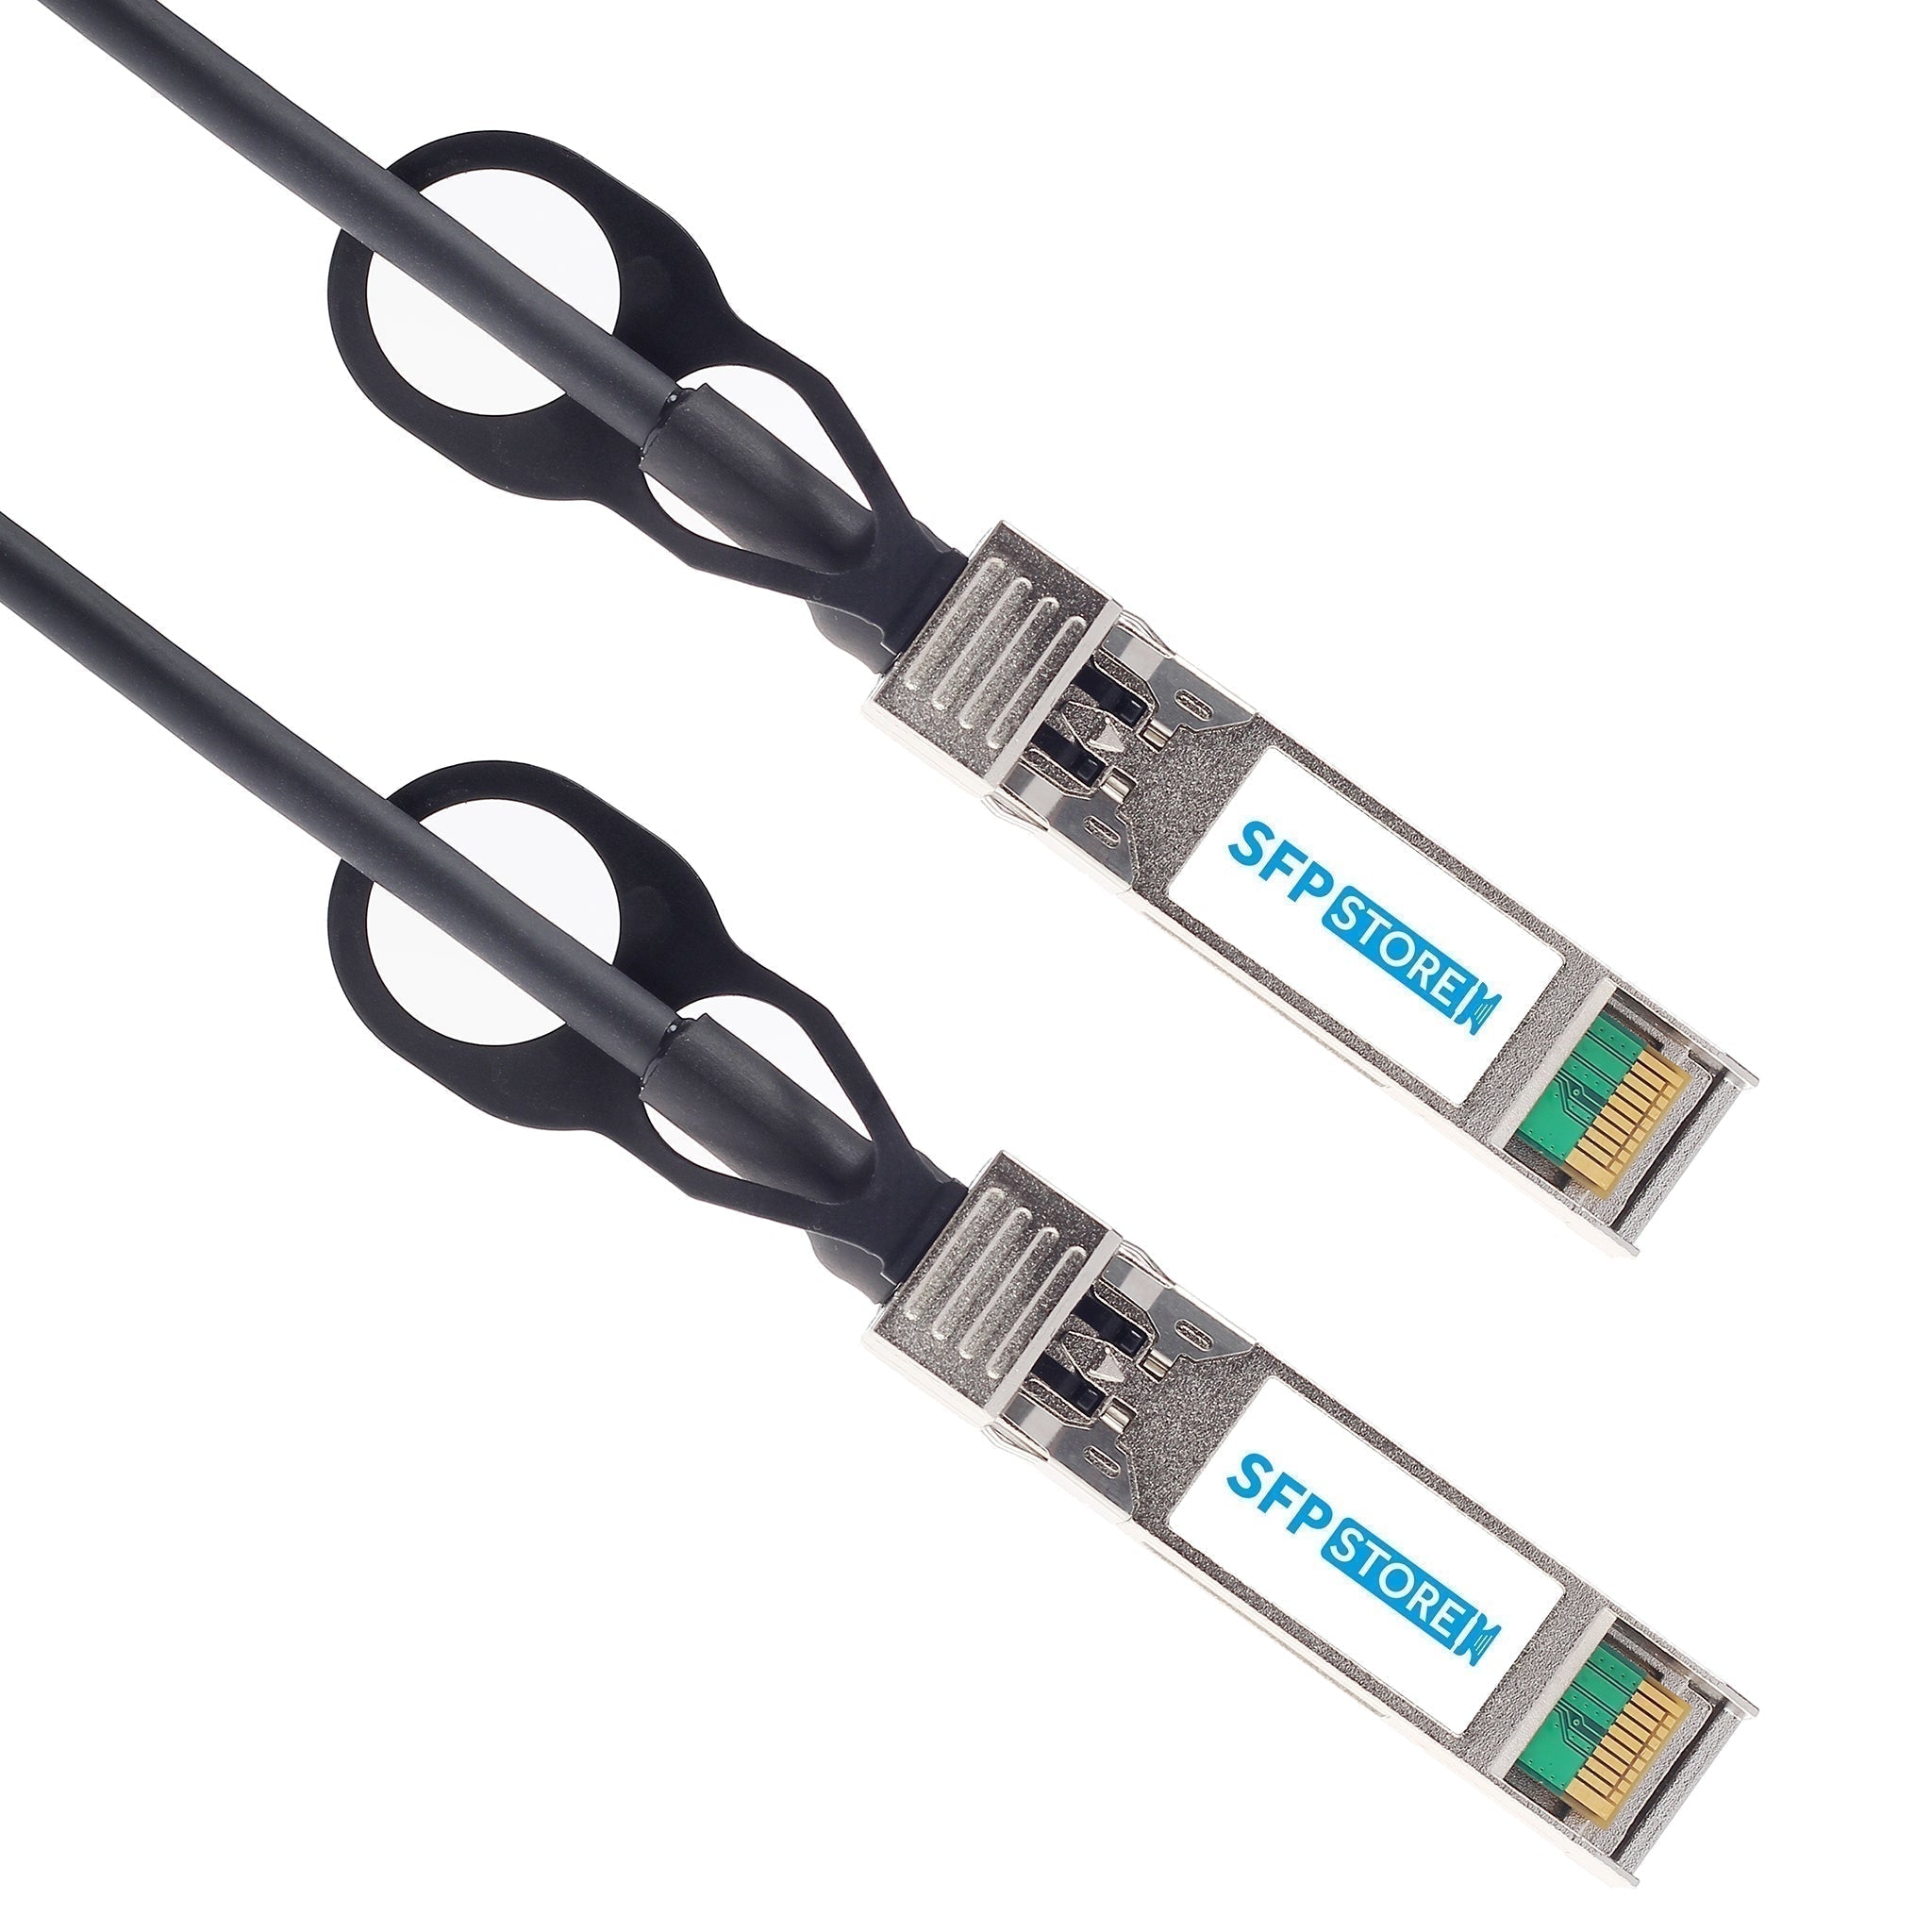 AT-QSFP5CU-C - 5m Allied Telesis Compatible 40G QSFP+ Passive Direct Attach Copper Twinax Cable